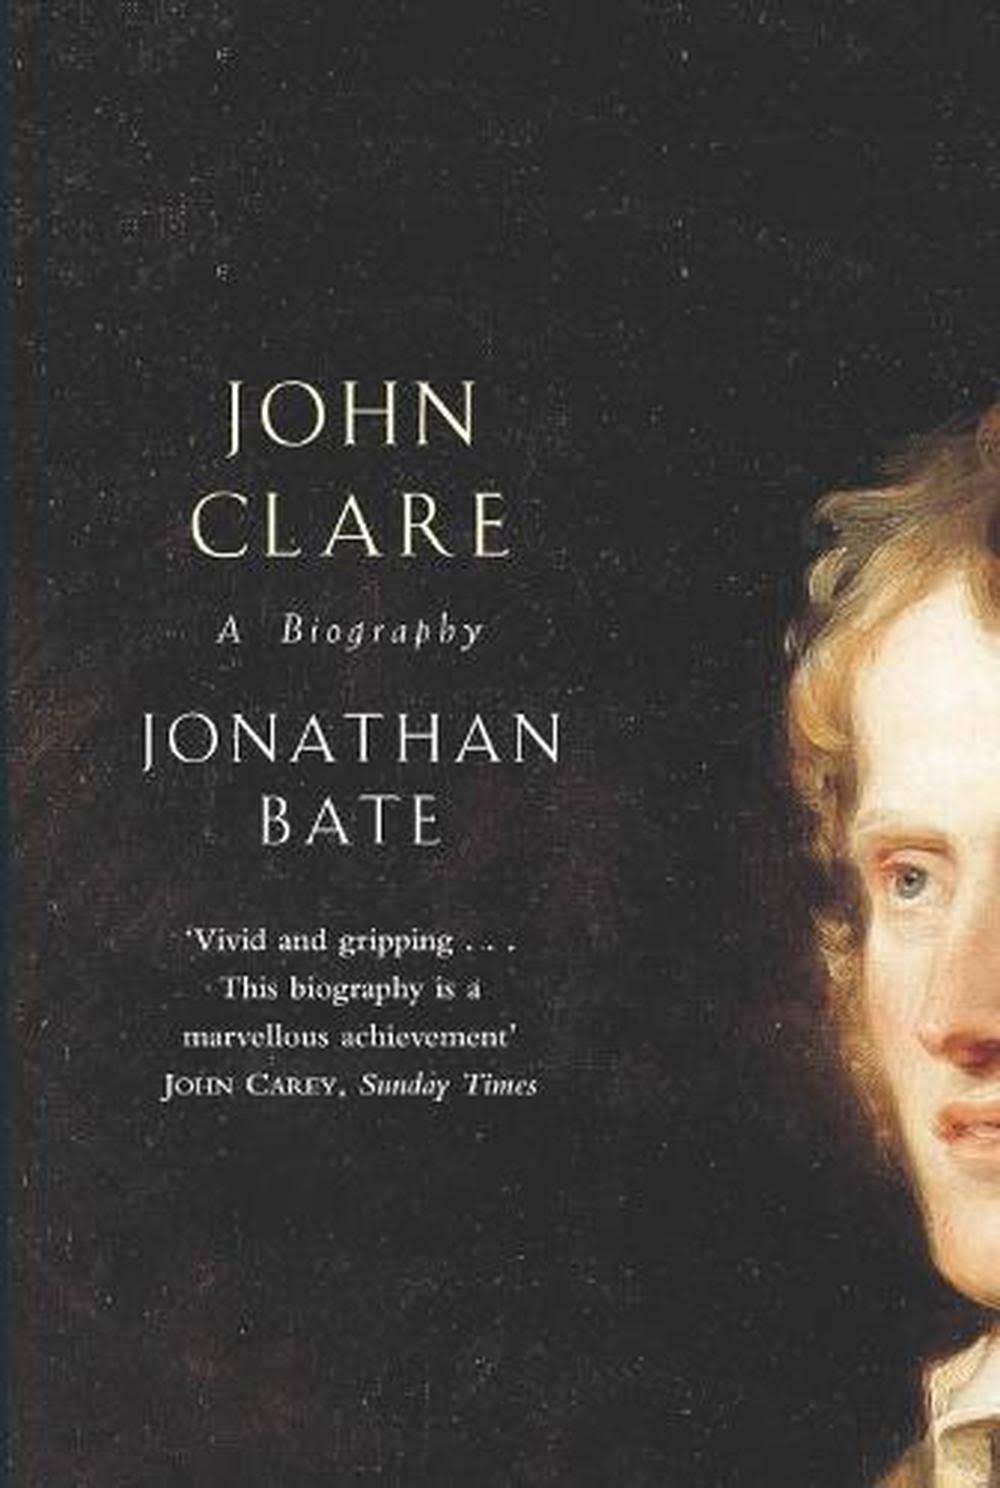 John Clare by Jonathan Bate